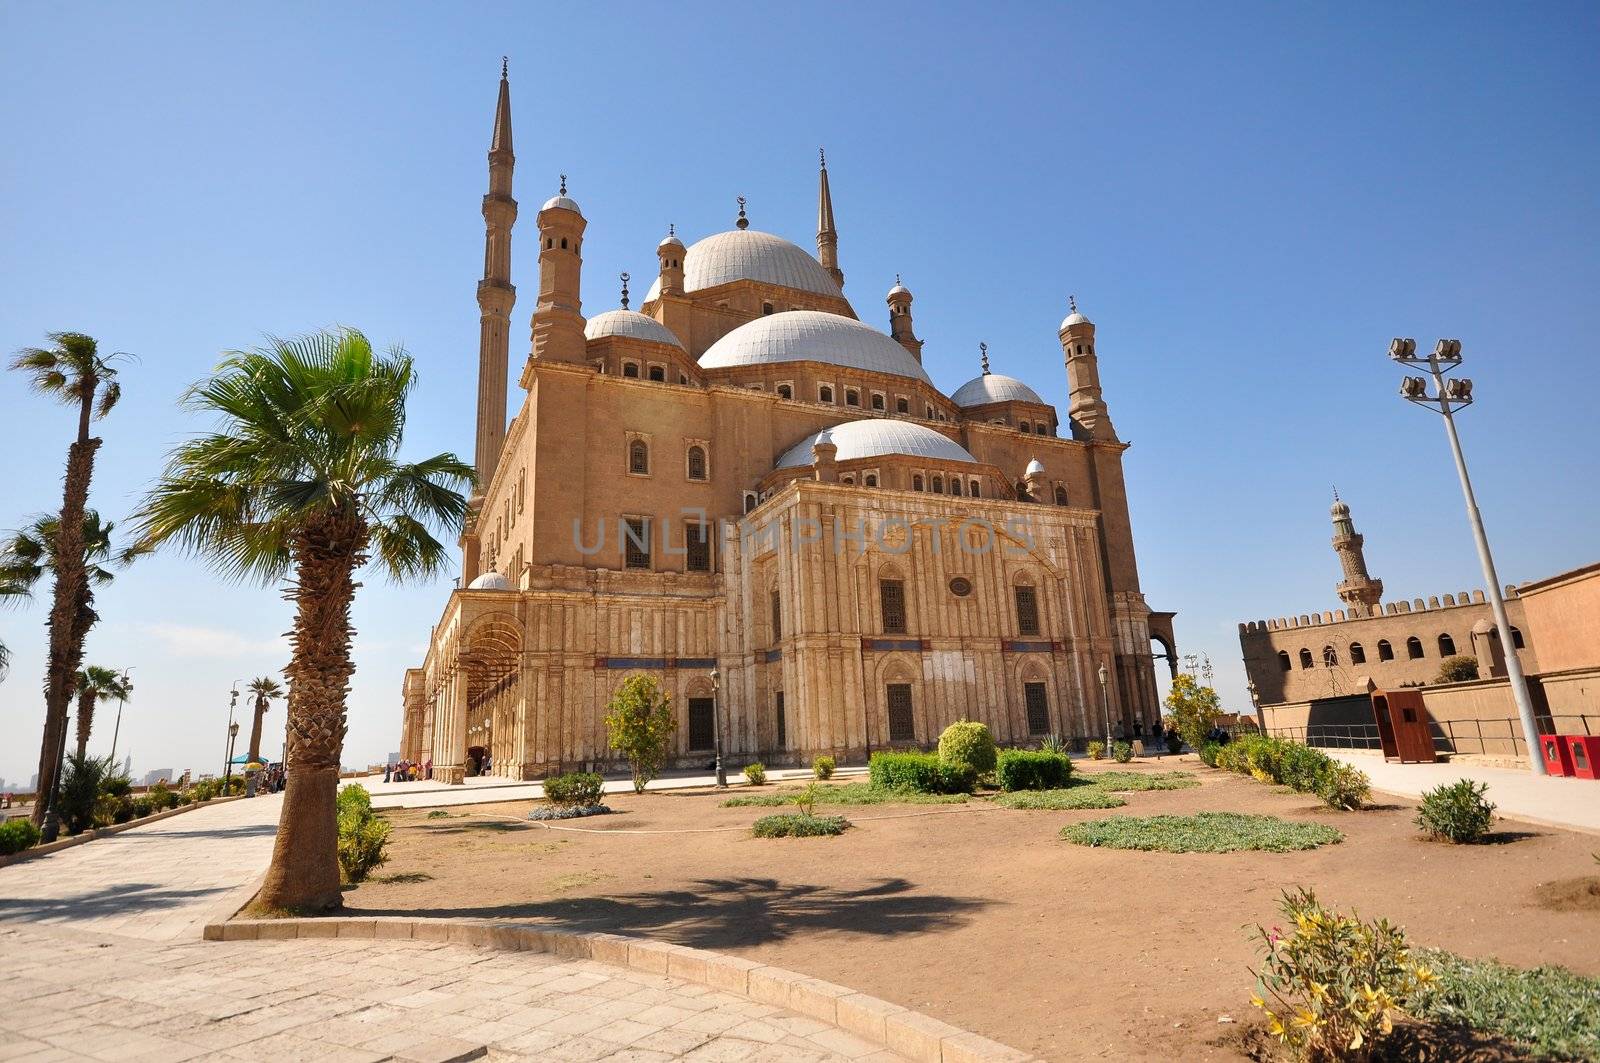 Muhammad Ali Mosque in Cairo, Egypt by ruigsantos